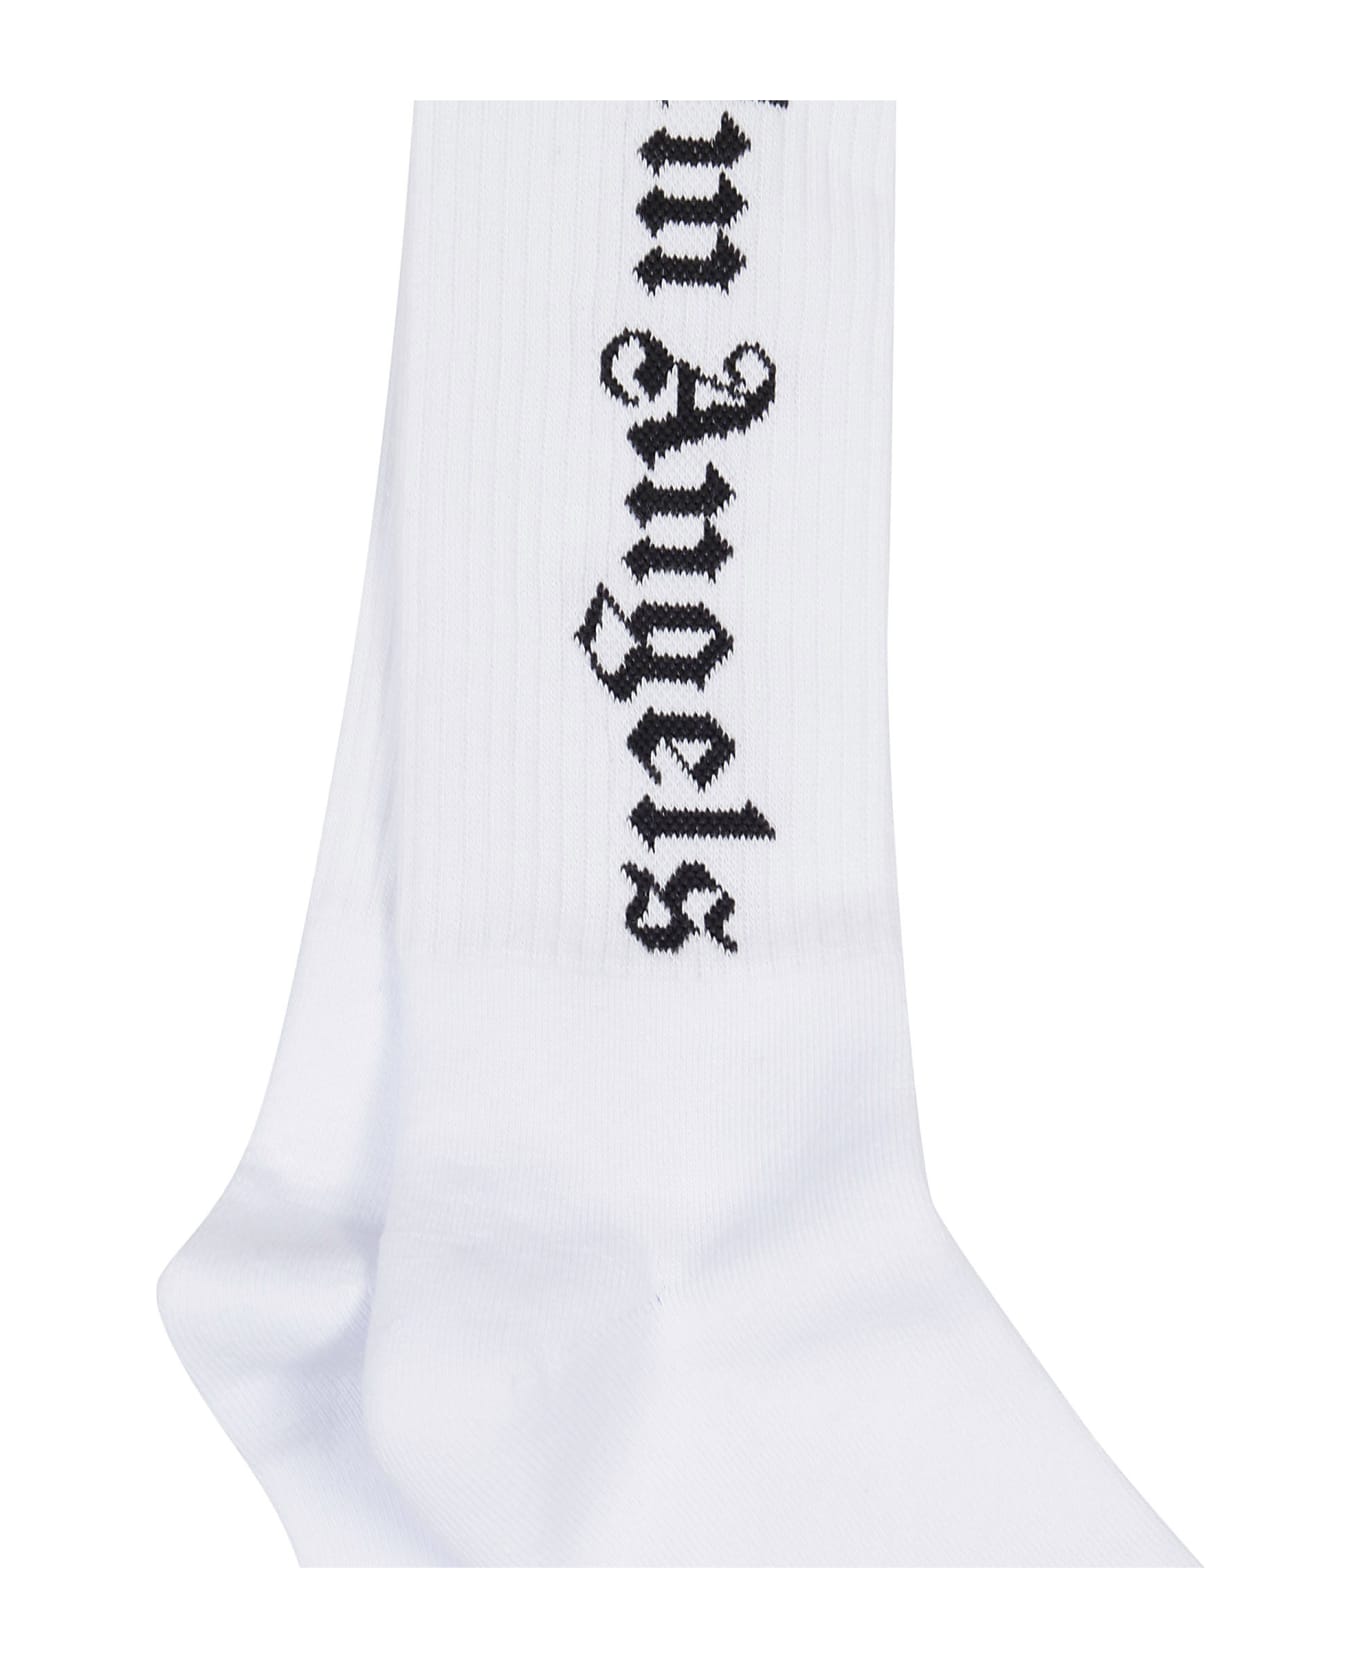 Palm Angels Classic Logo Socks - White Black